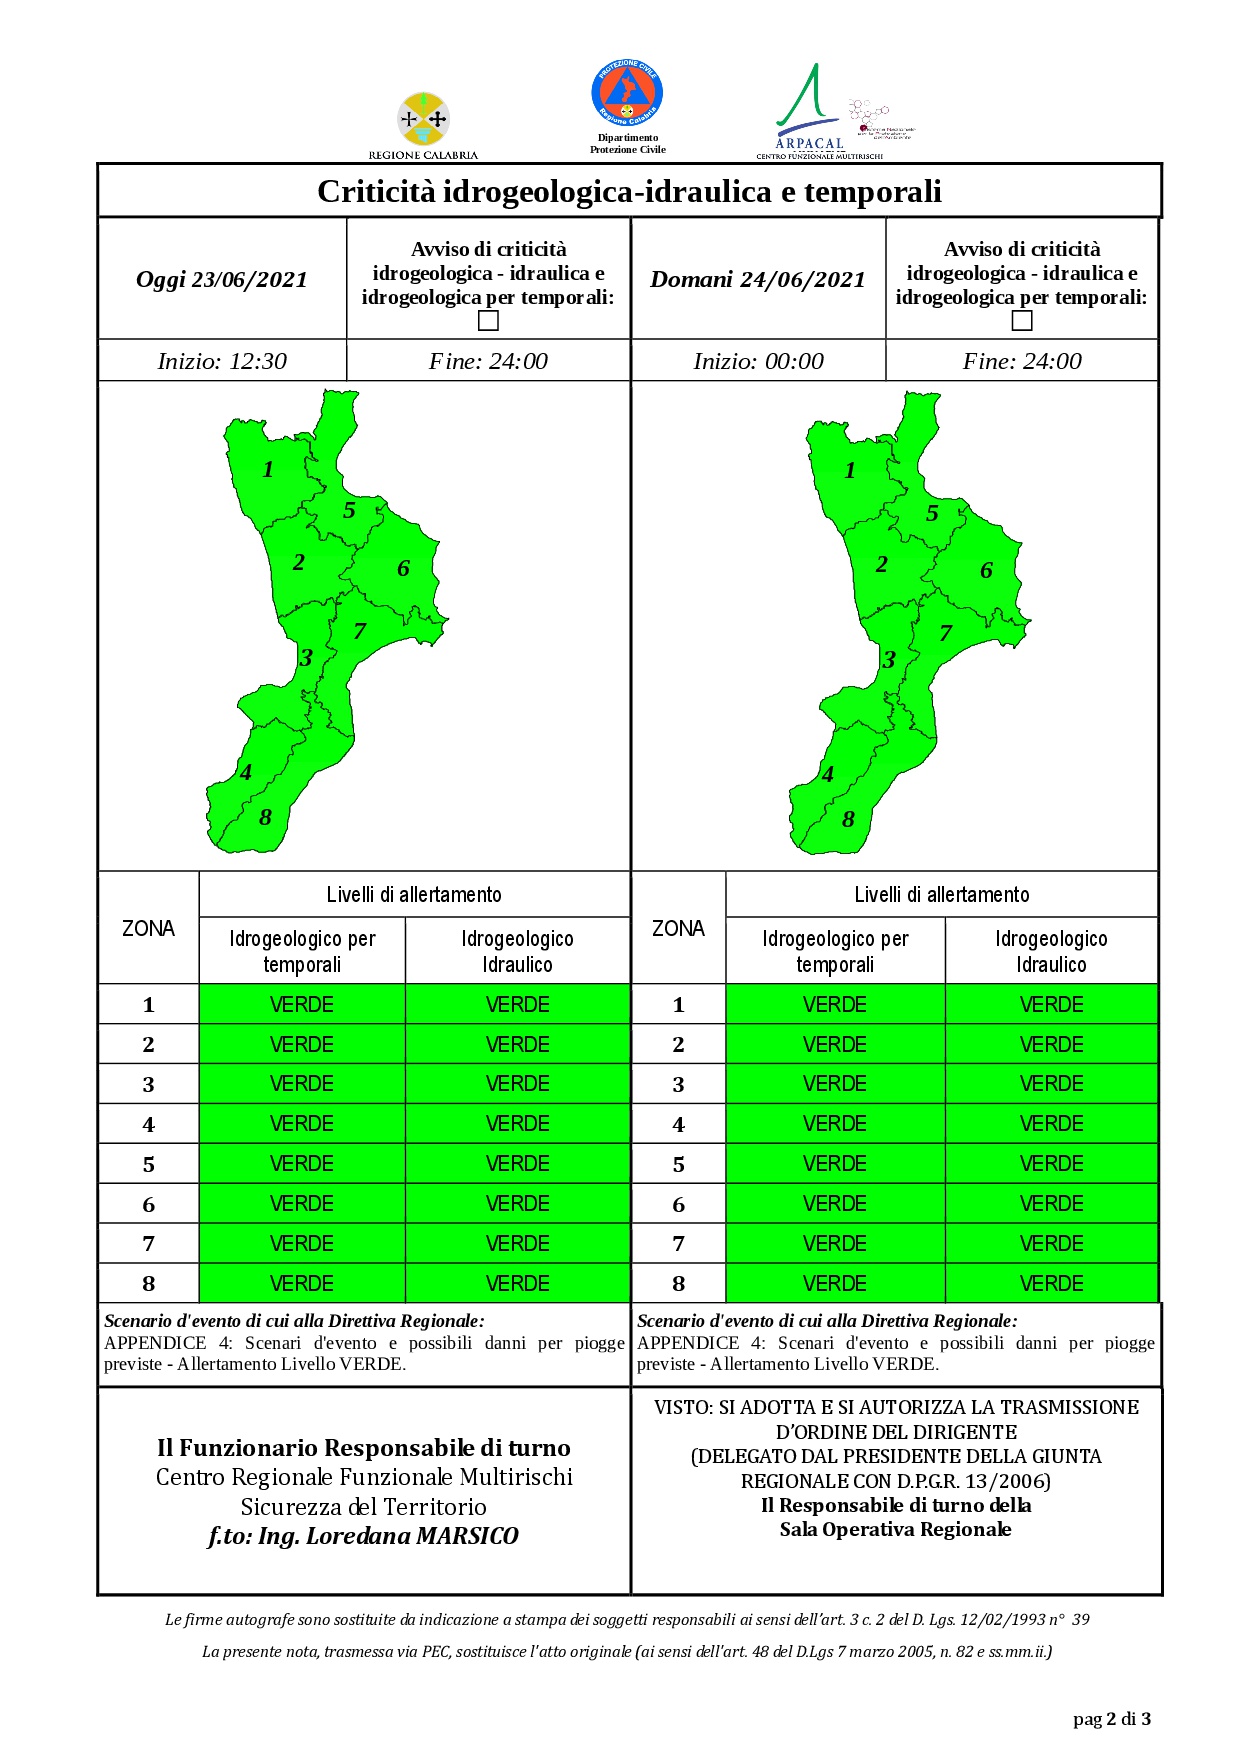 Criticità idrogeologica-idraulica e temporali in Calabria 23-06-2021